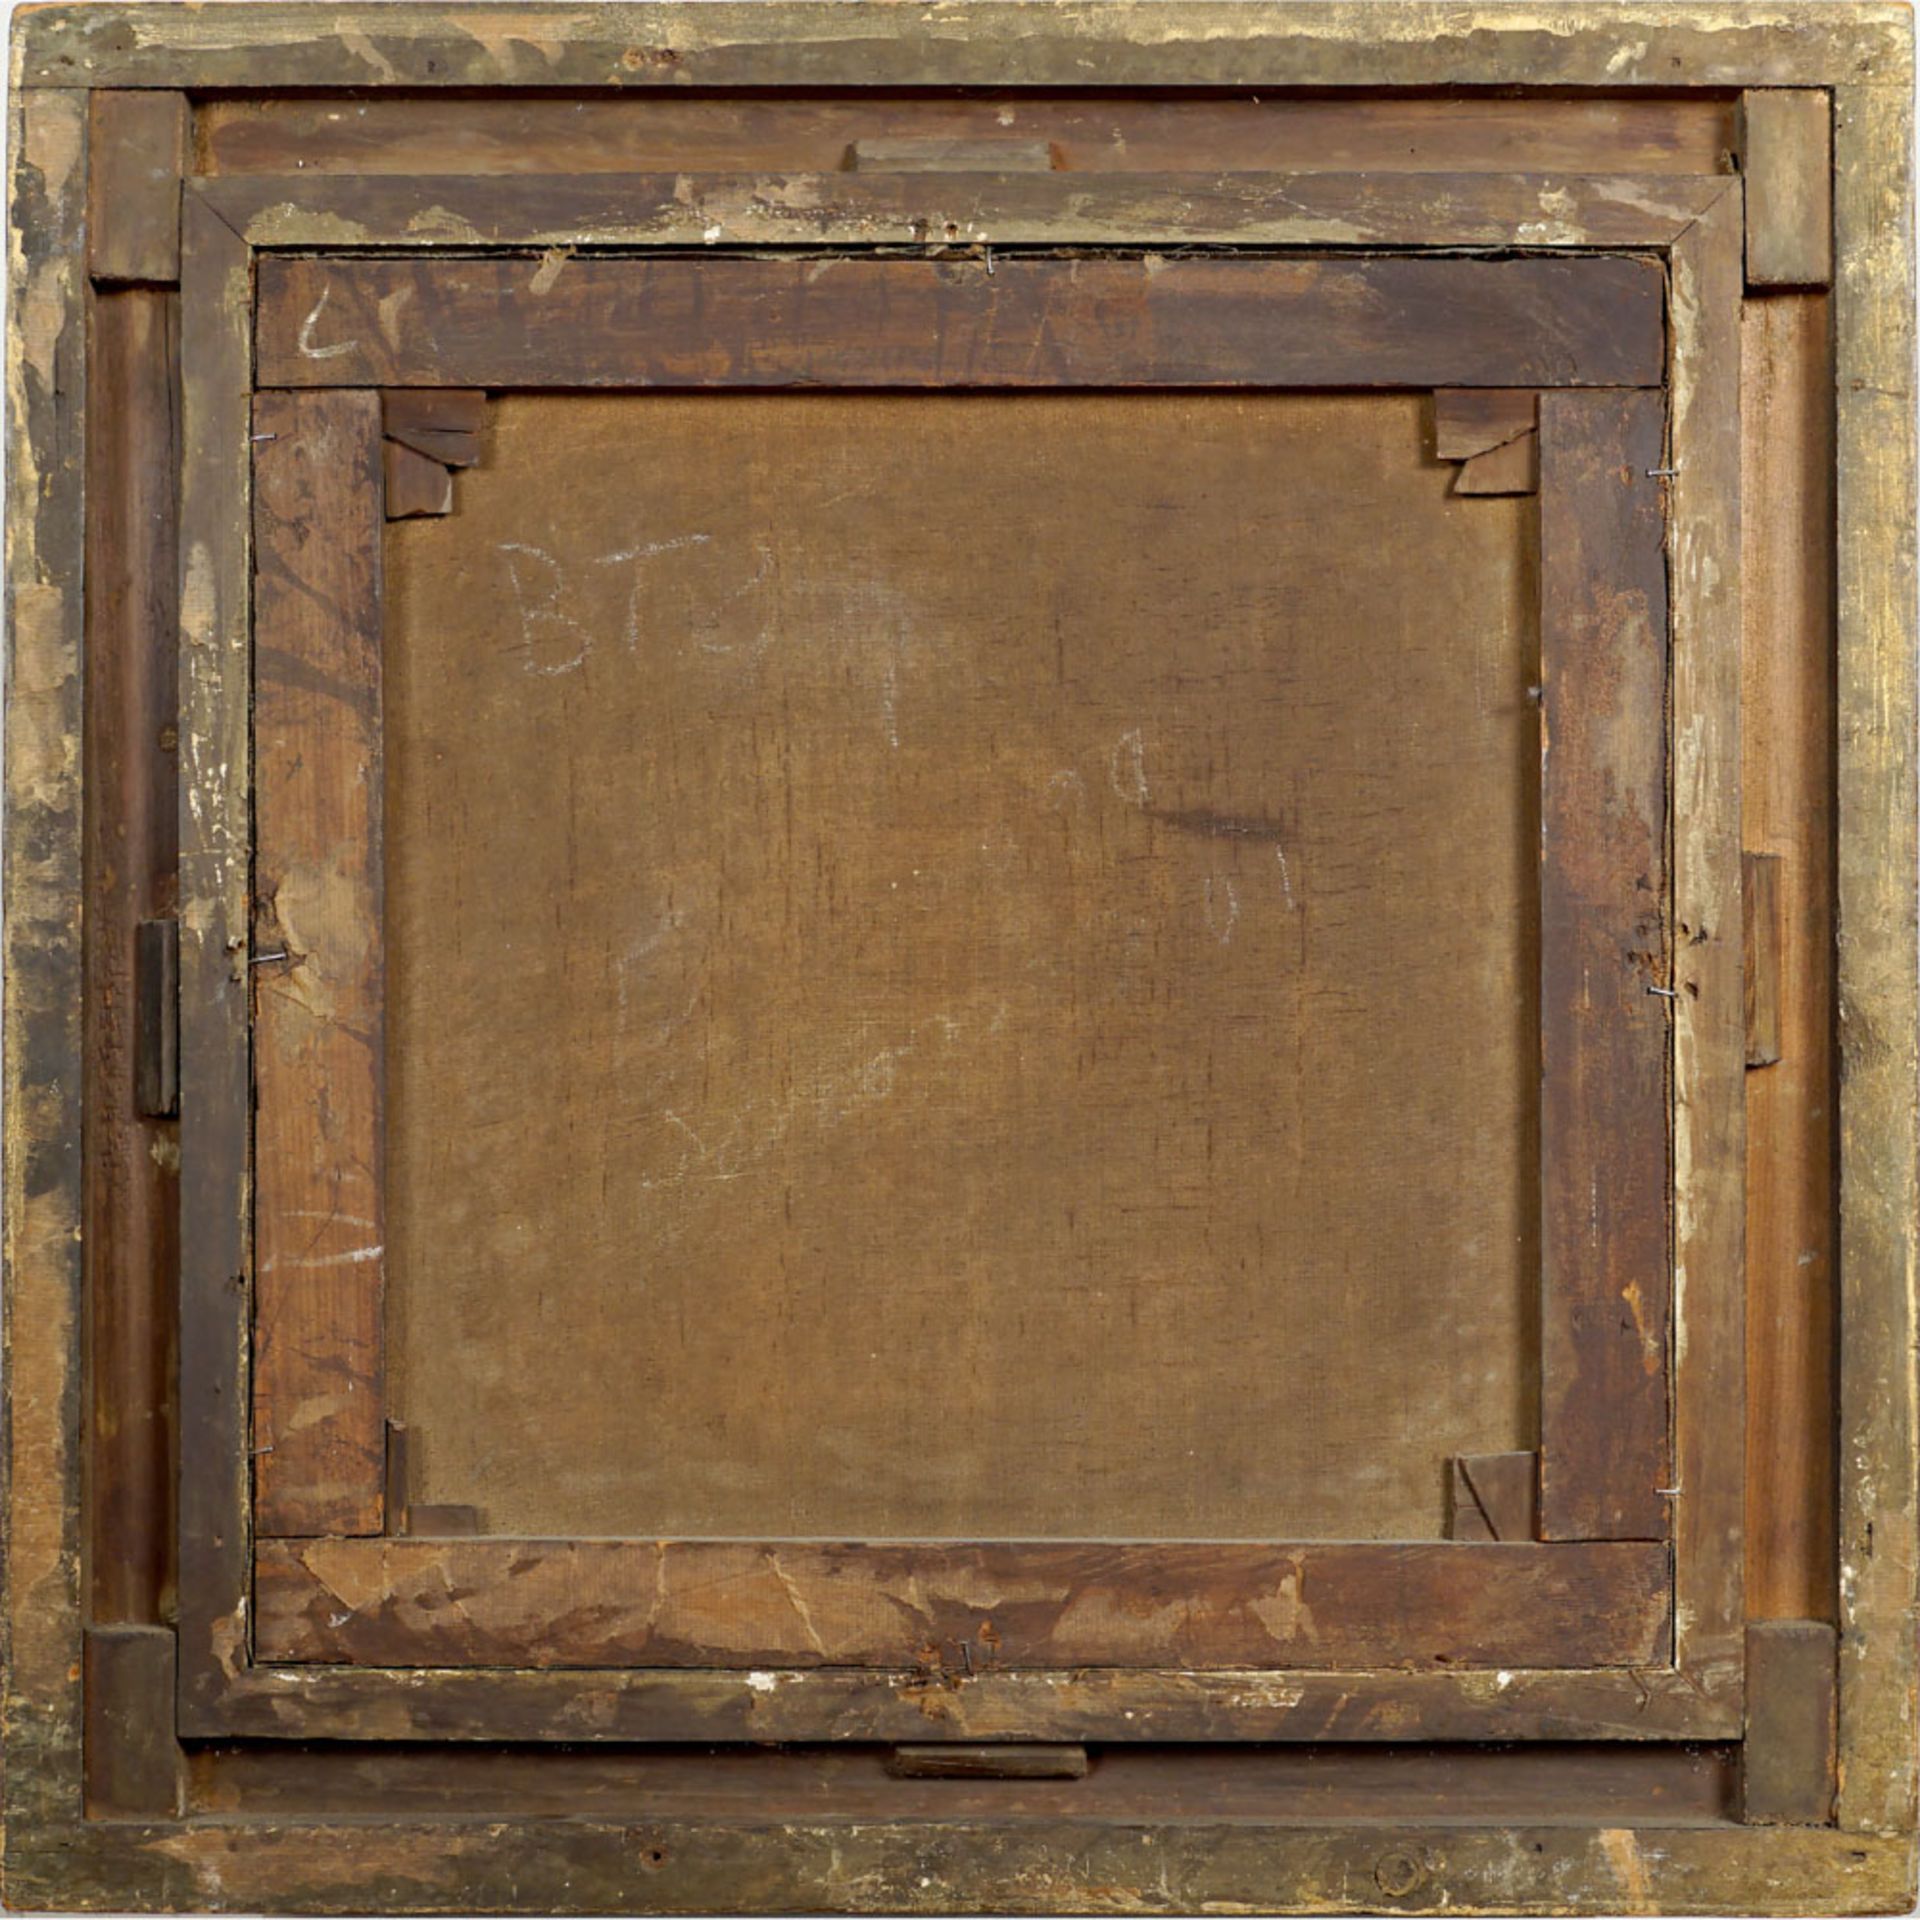 English School 18th Century 51x51 cm - Image 2 of 2